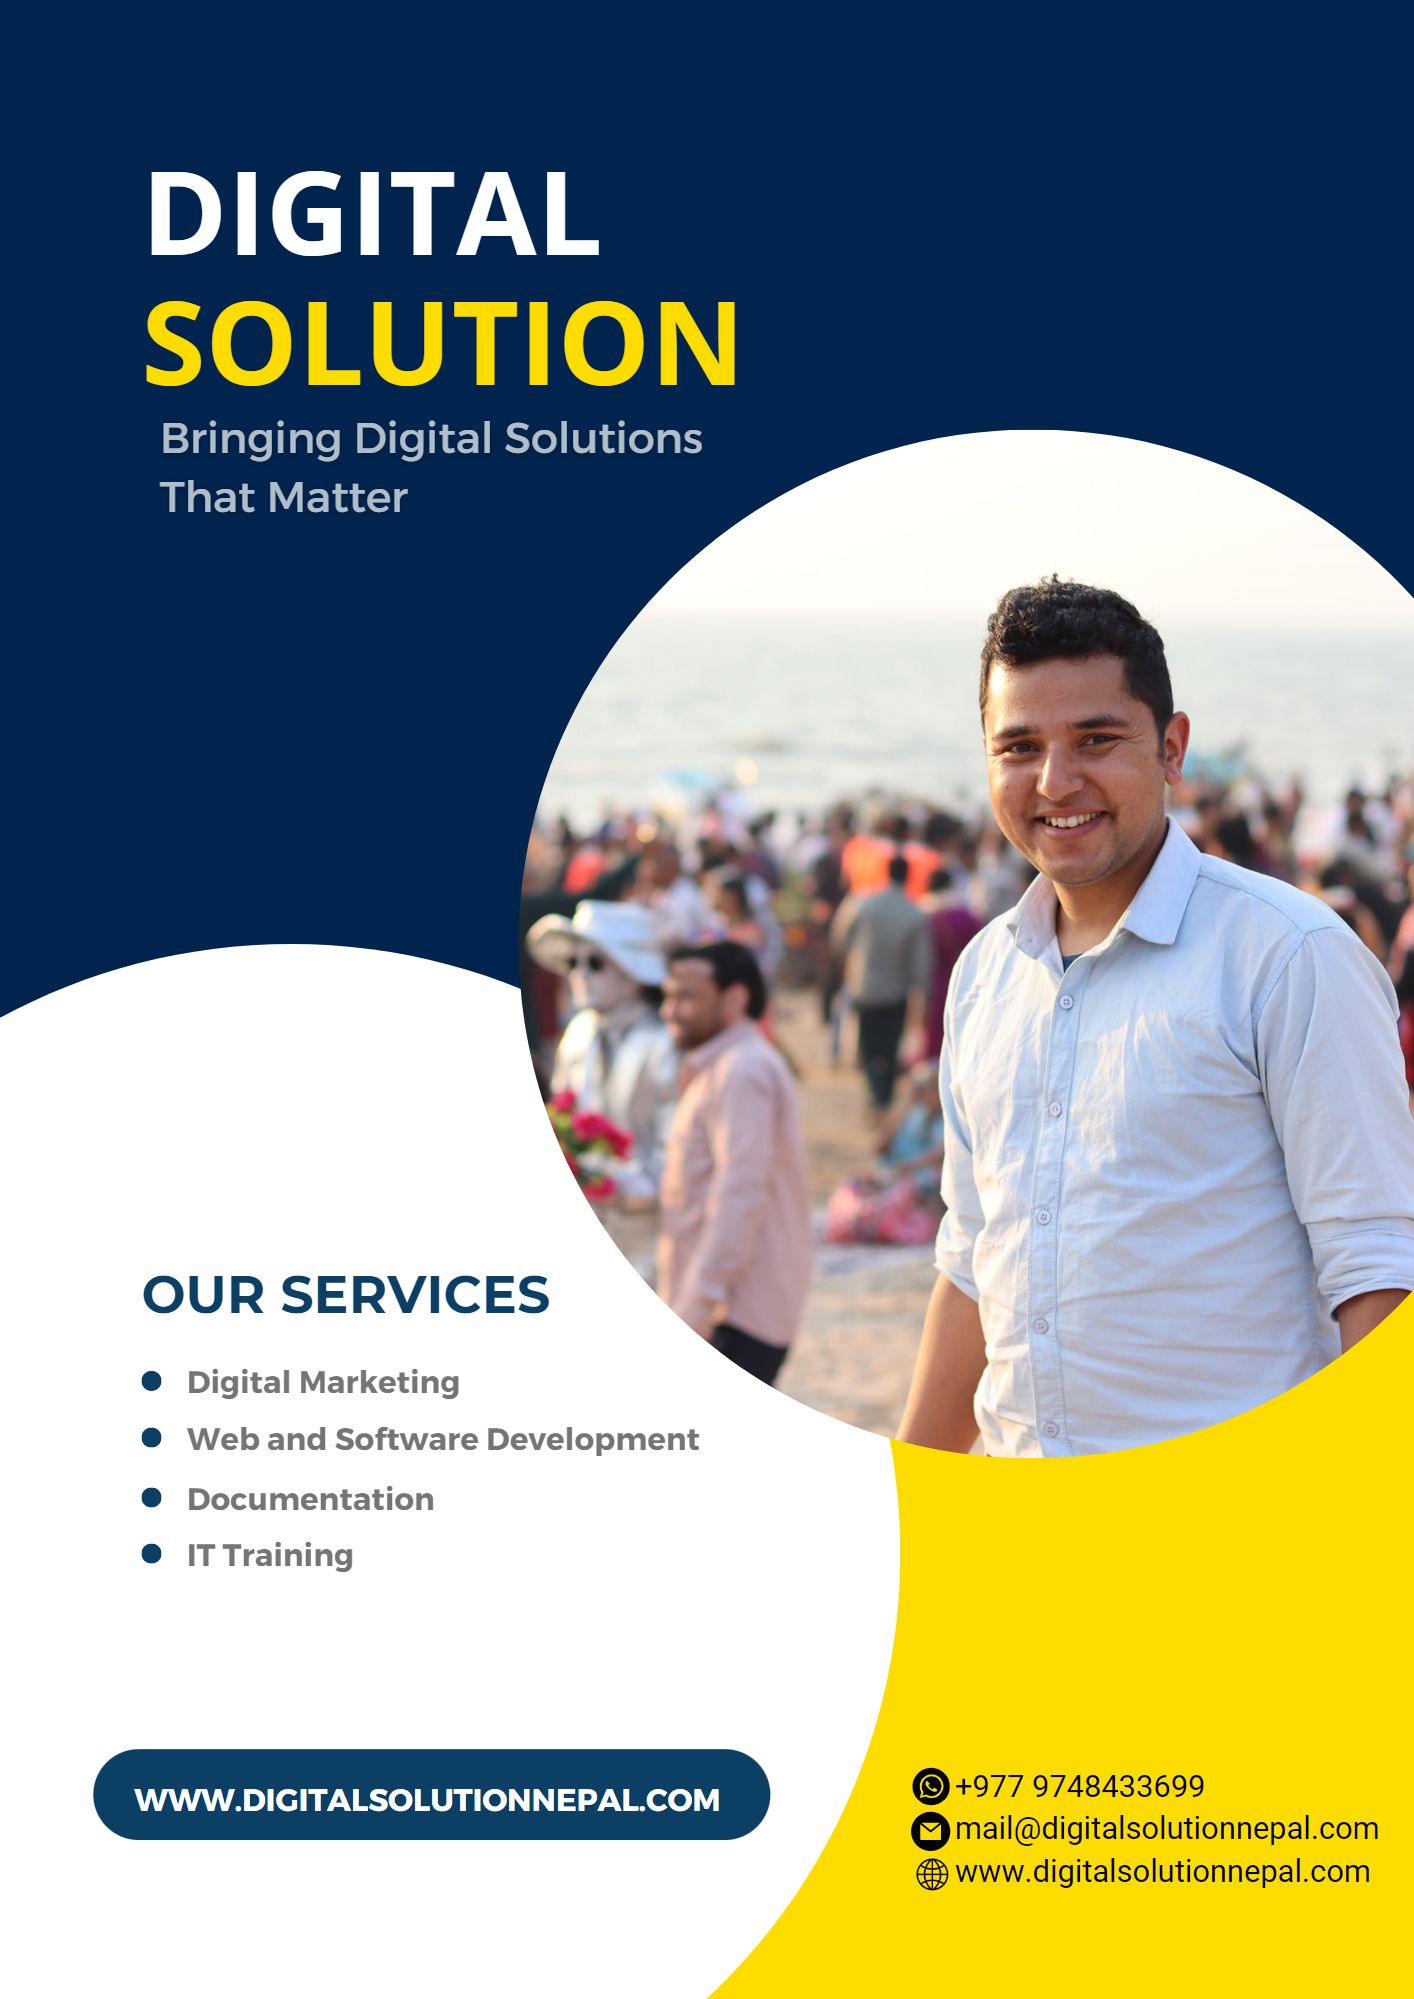 Digital Solution Services